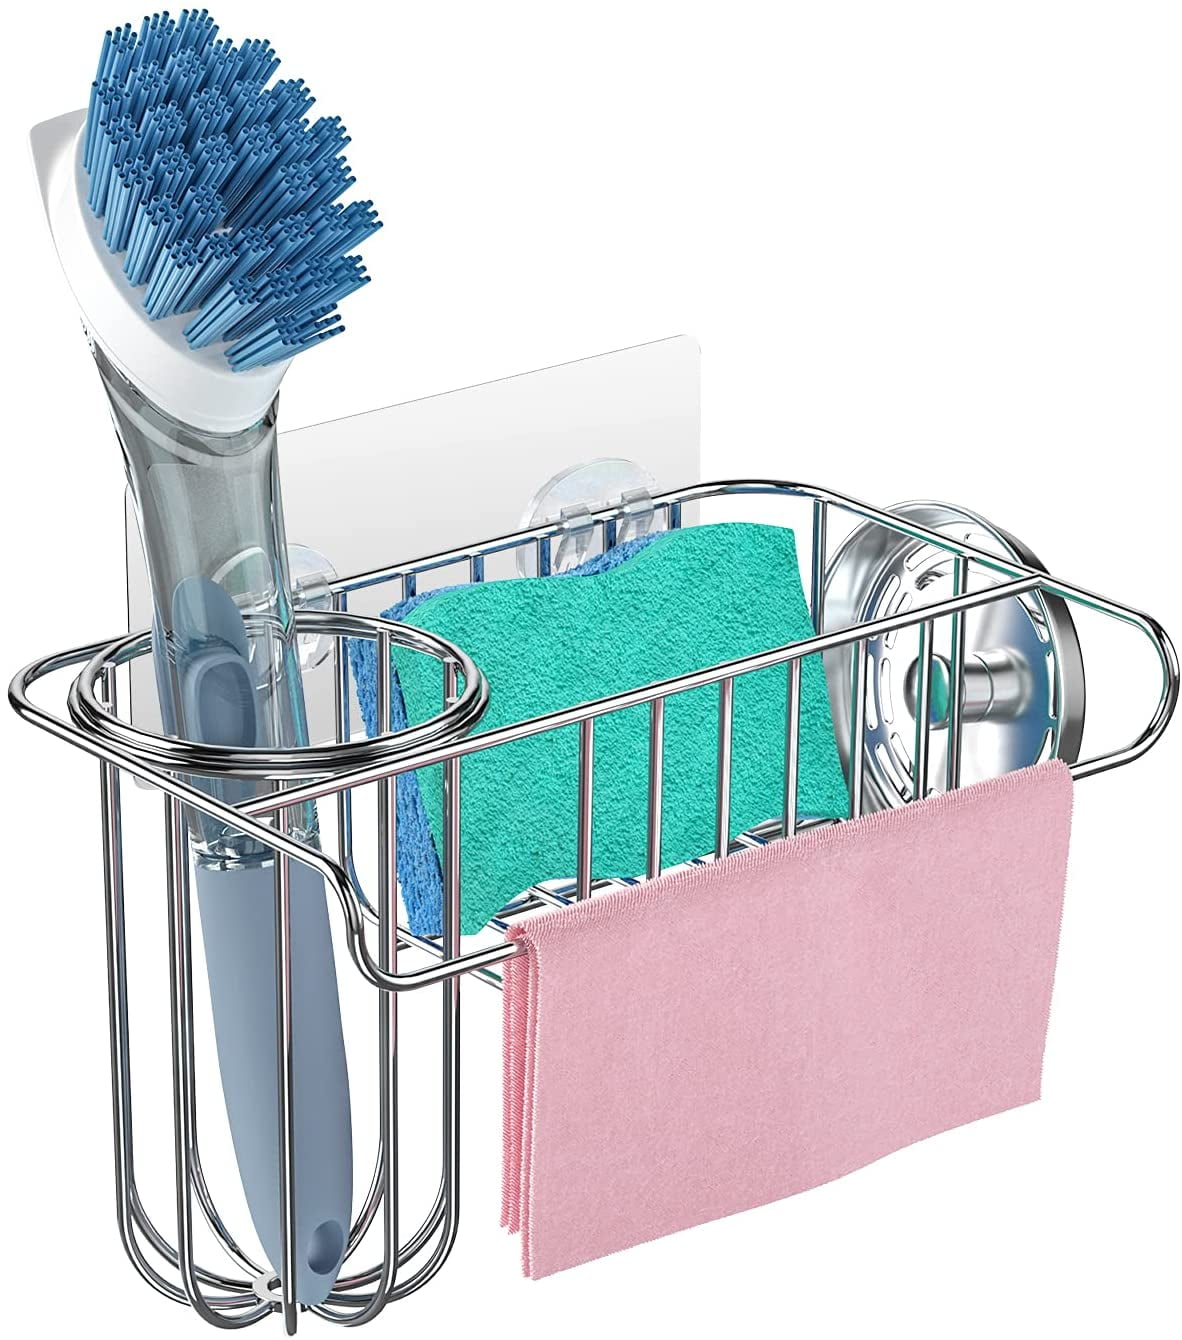 Handy Housewares Kitchen Sink Caddy Dish Soap Scrubber Sponge Holder B